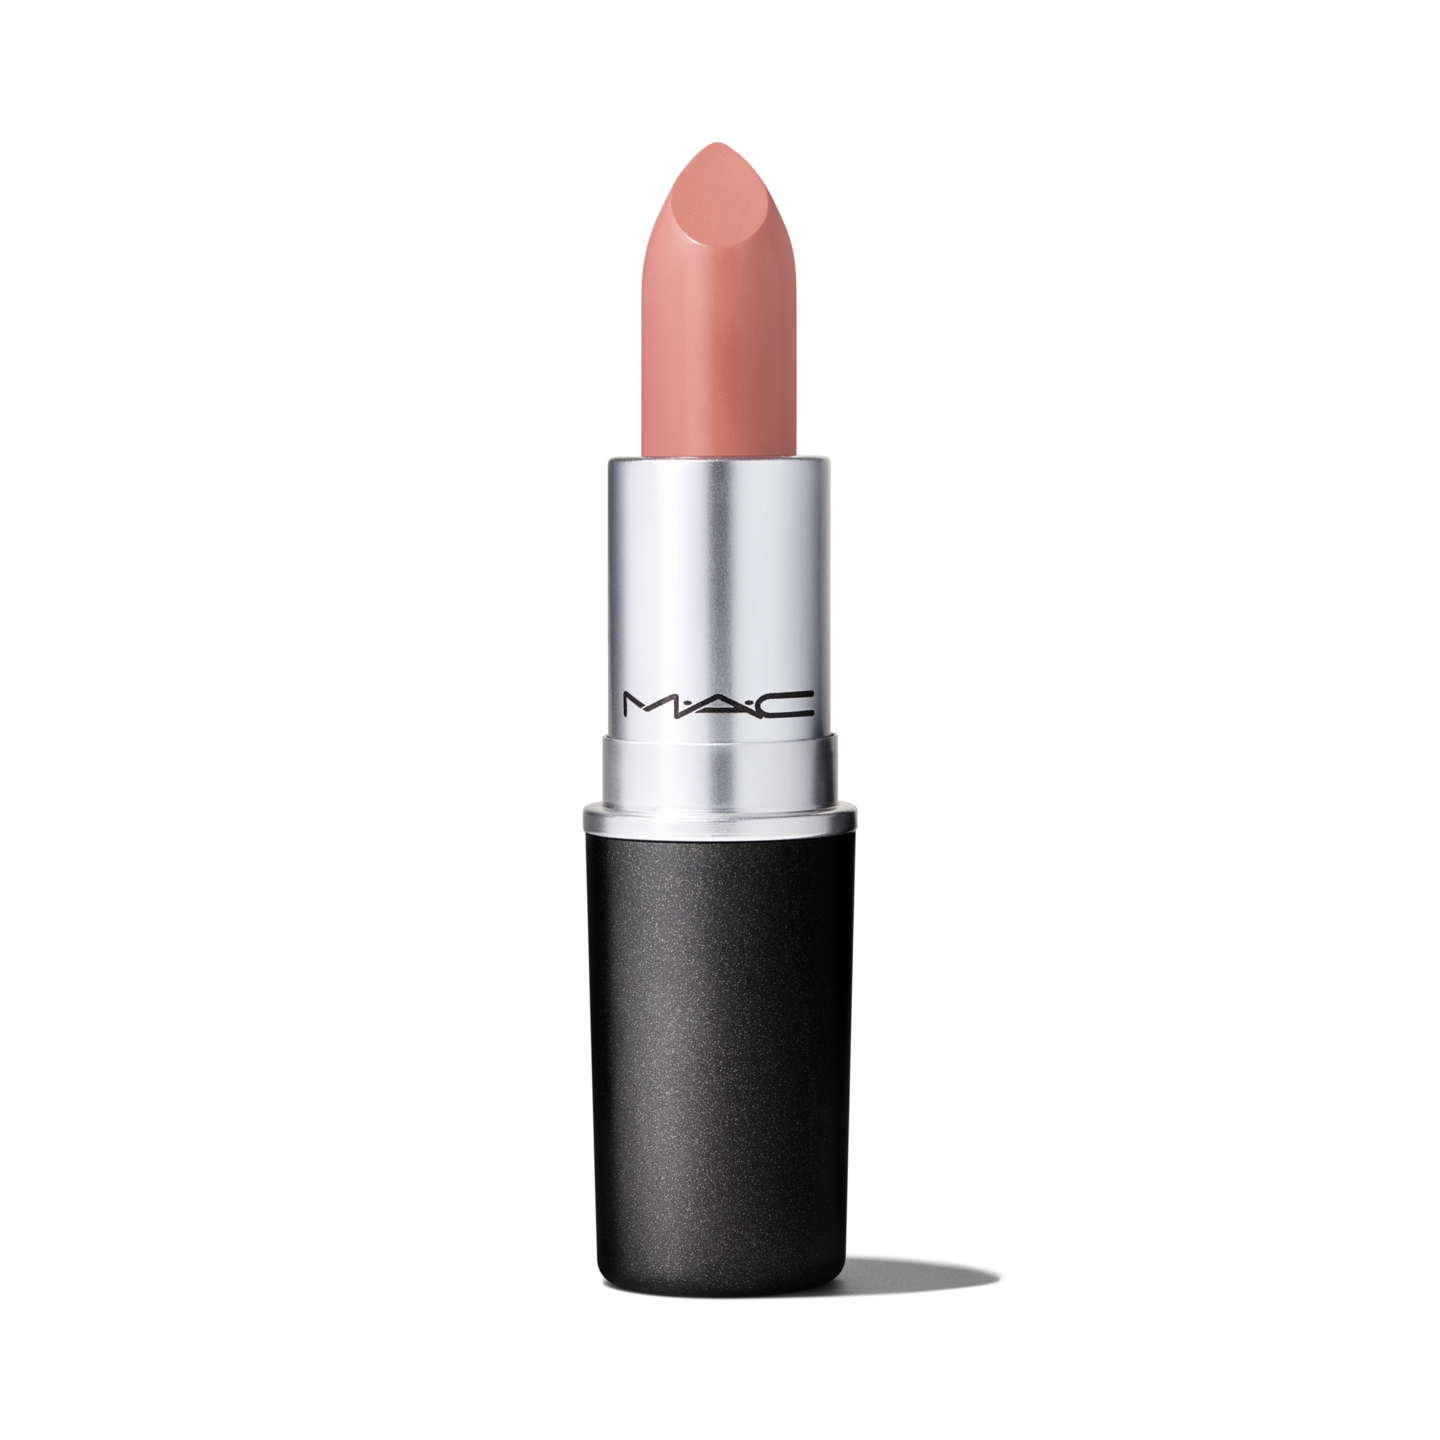 Make Up For Ever Rouge Artist Lipstick 114 Lovely Leather 0.10 oz